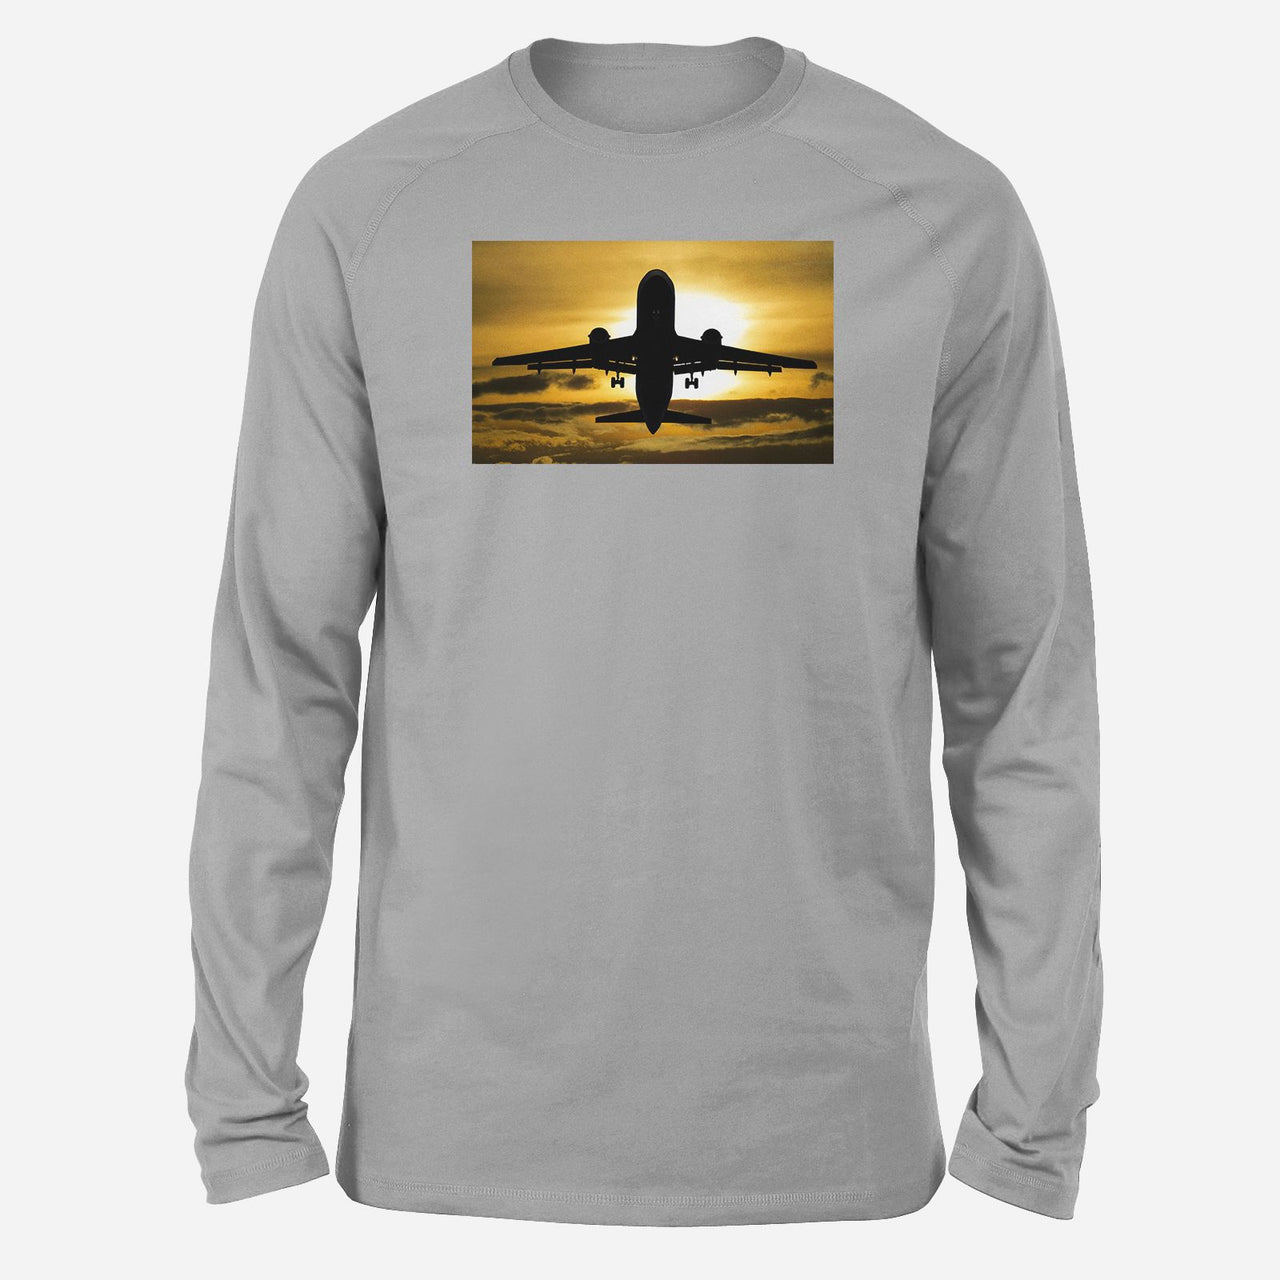 Departing Passanger Jet During Sunset Designed Long-Sleeve T-Shirts